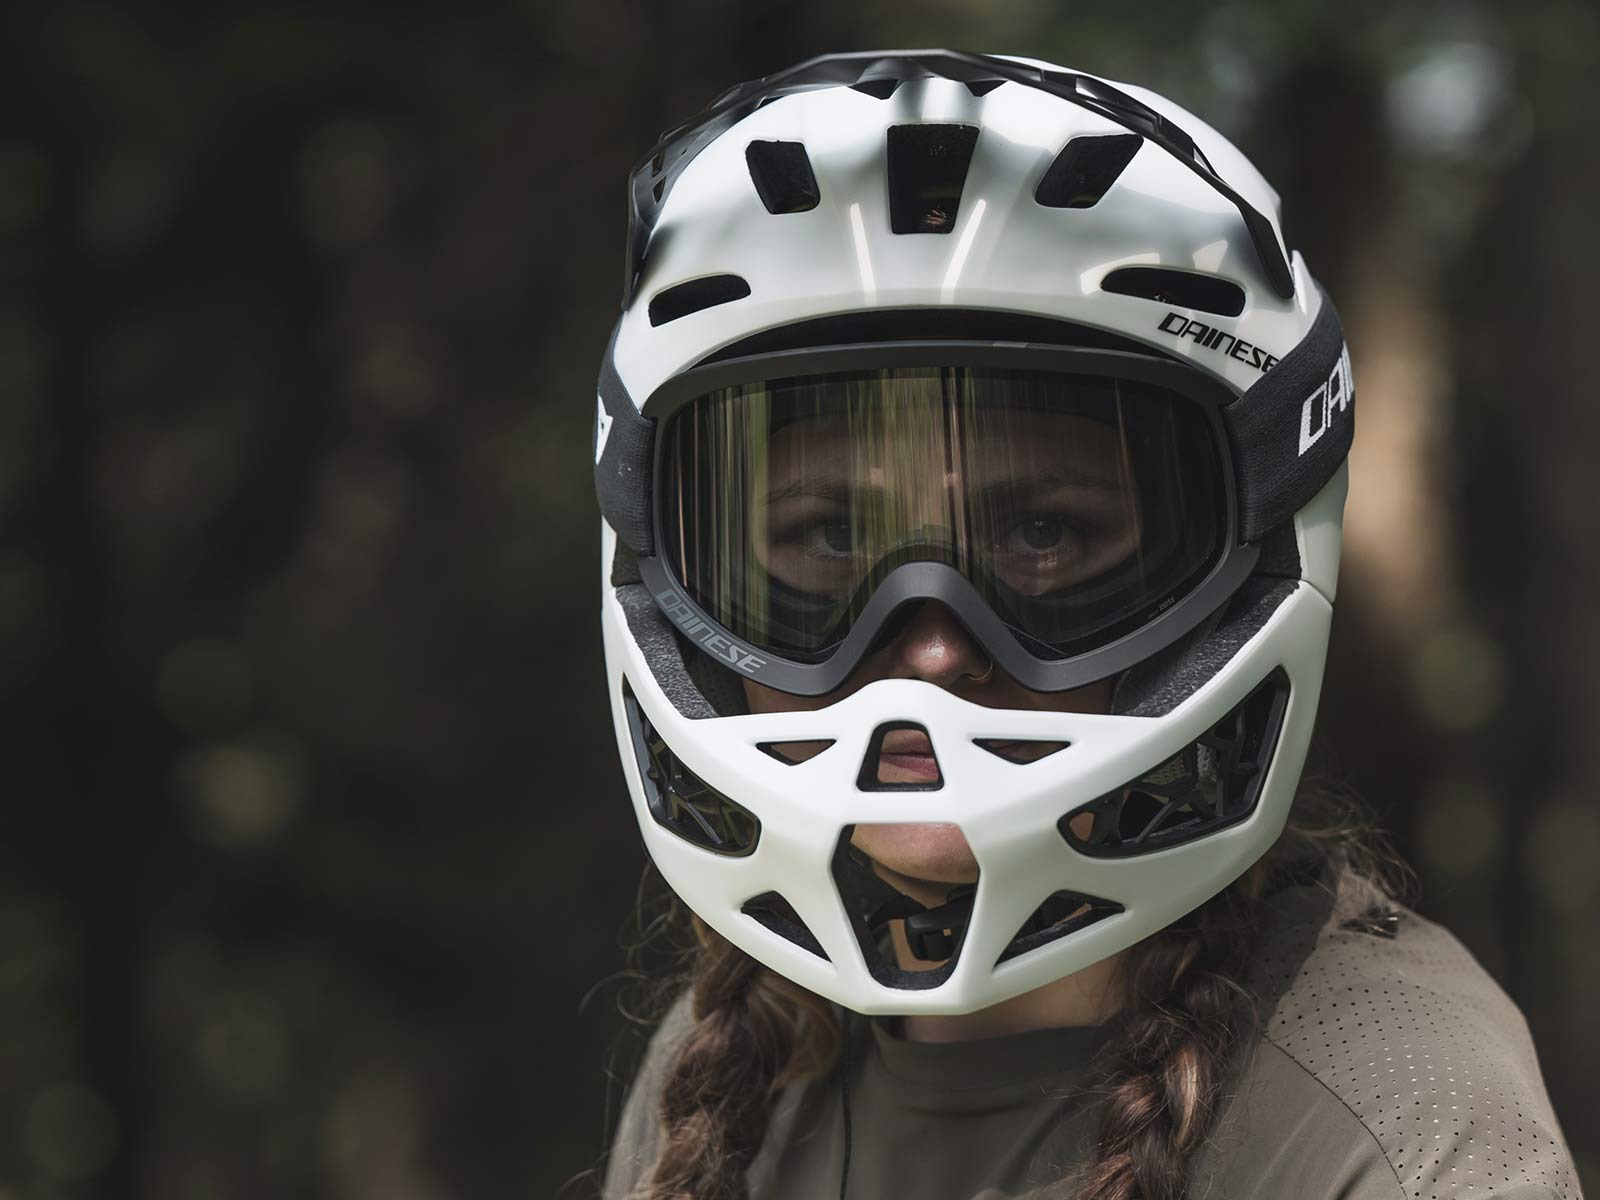 Dainese Linea 01 world's lightest full face helmet, lightweight MIPS DH MTB protection at 570g, Mountain Bike Connection rider Kasia Szlezak, photos by Rupert Fowler, front